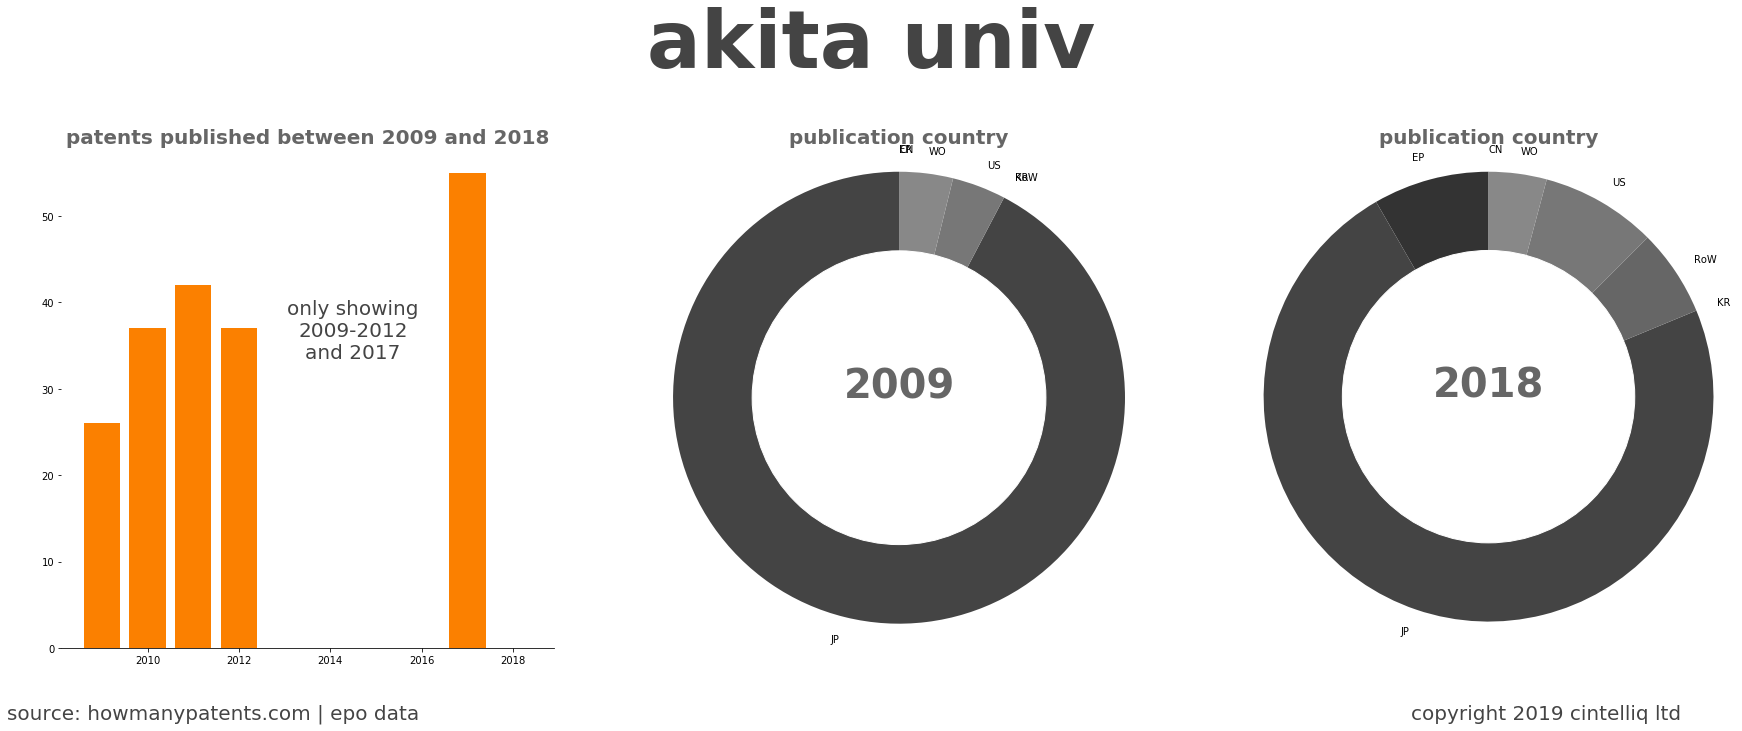 summary of patents for Akita Univ